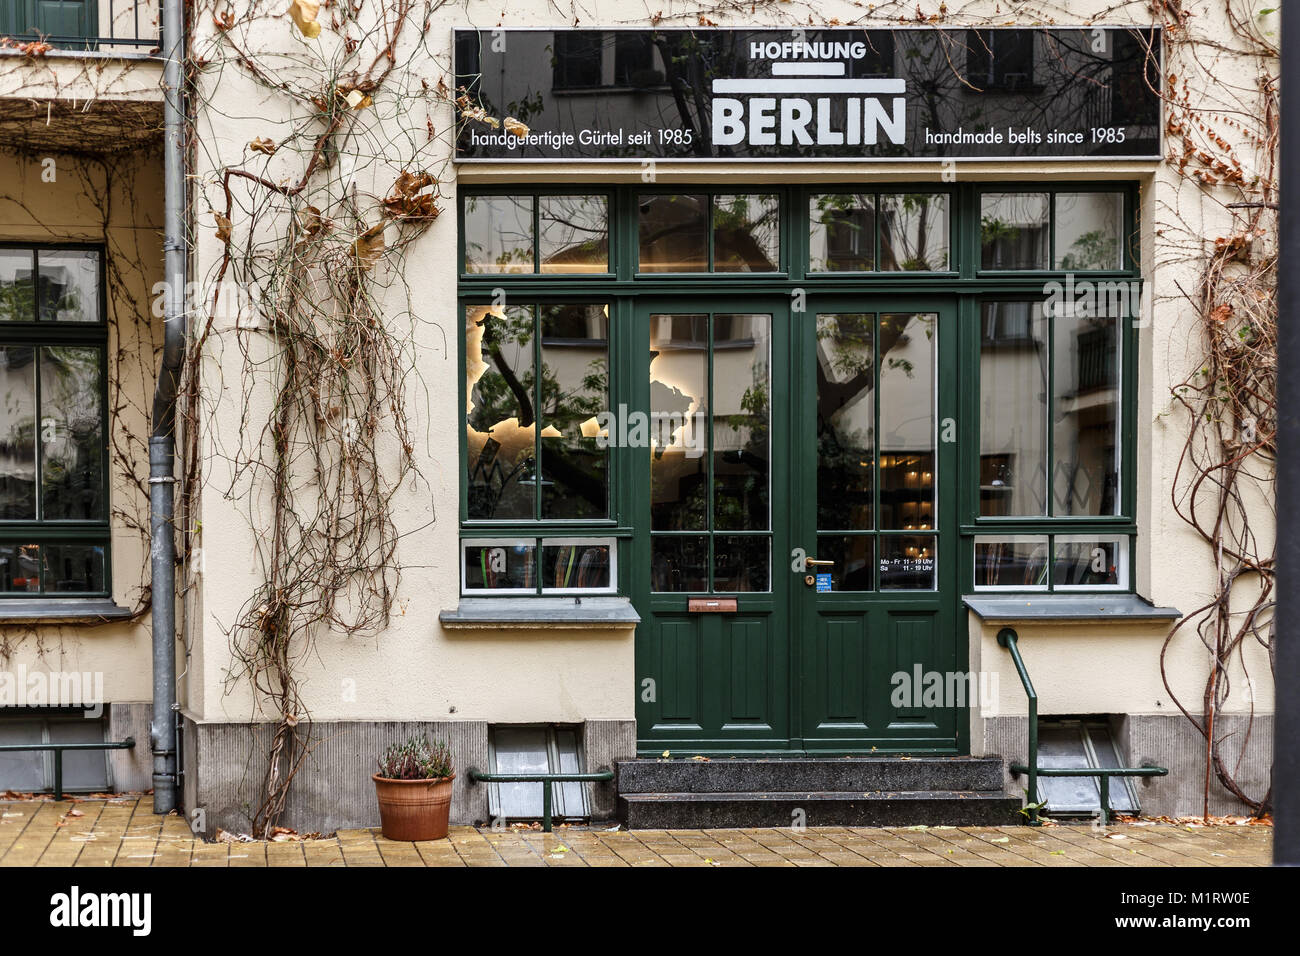 HOFFNUNG Berlin shop in Berlin, Germany Stock Photo